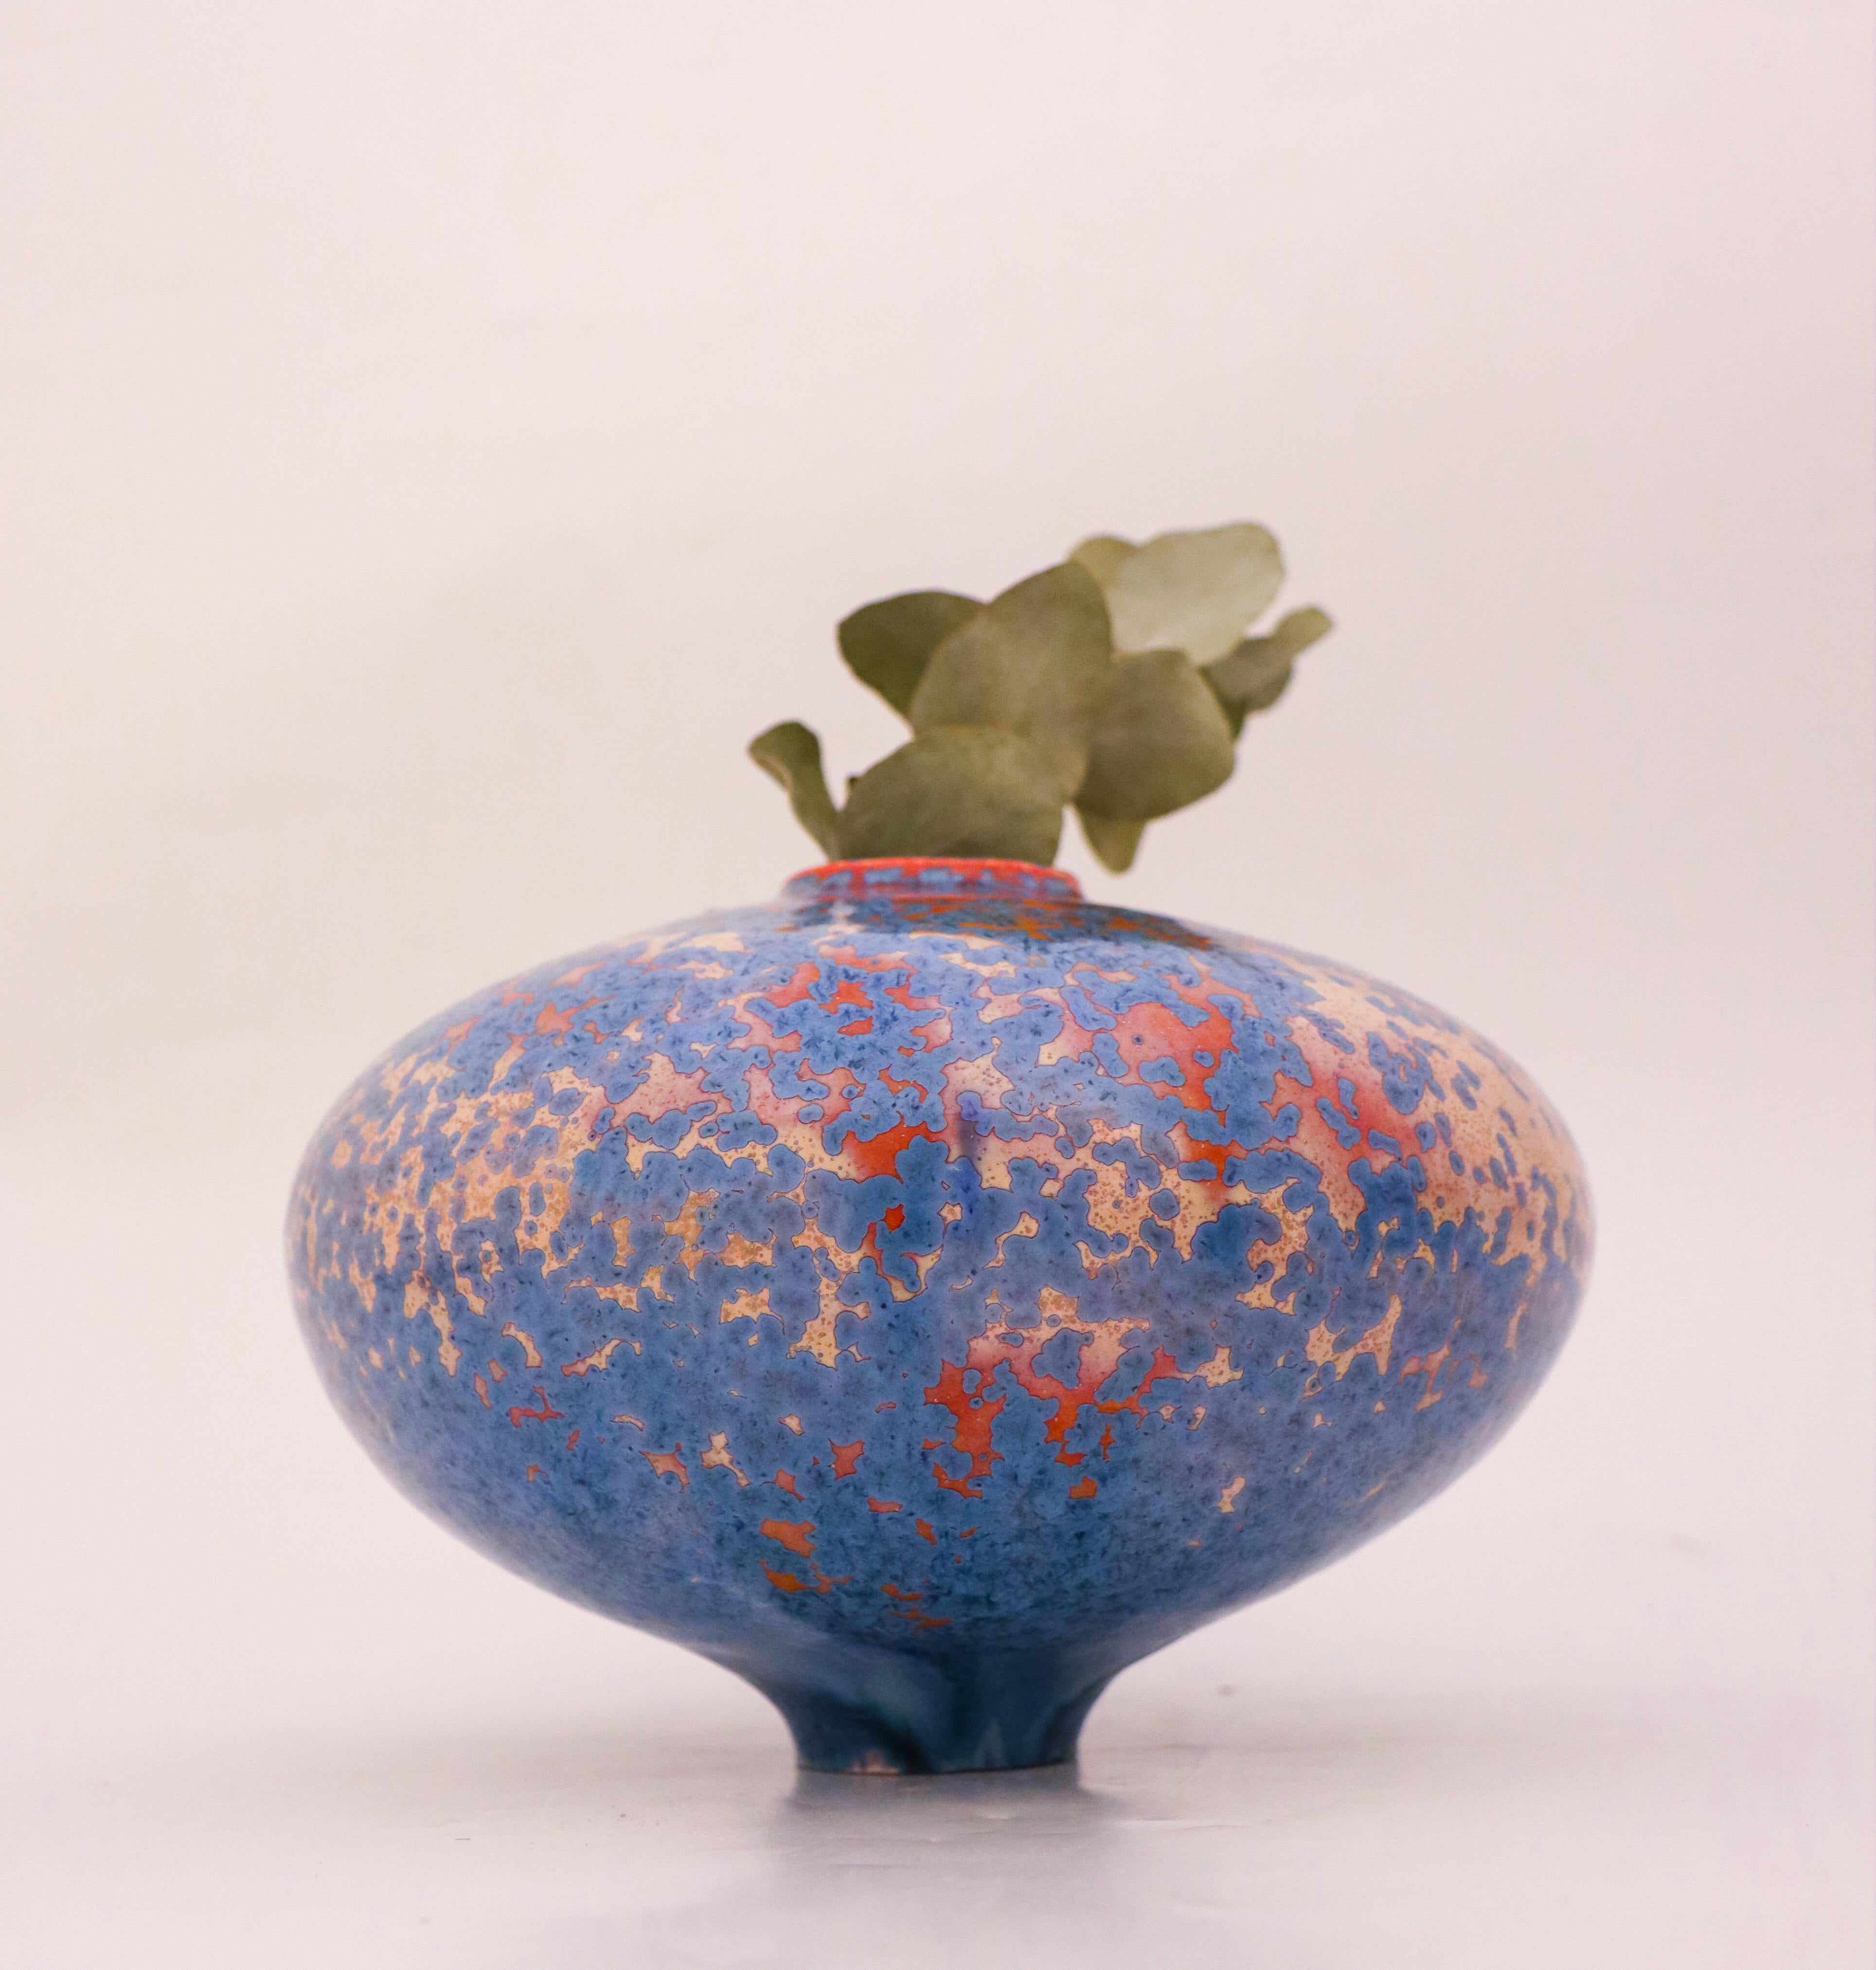 Glazed Isak Isaksson Red & Blue Ceramic Vase Crystalline Glaze - Contemporary Artist For Sale